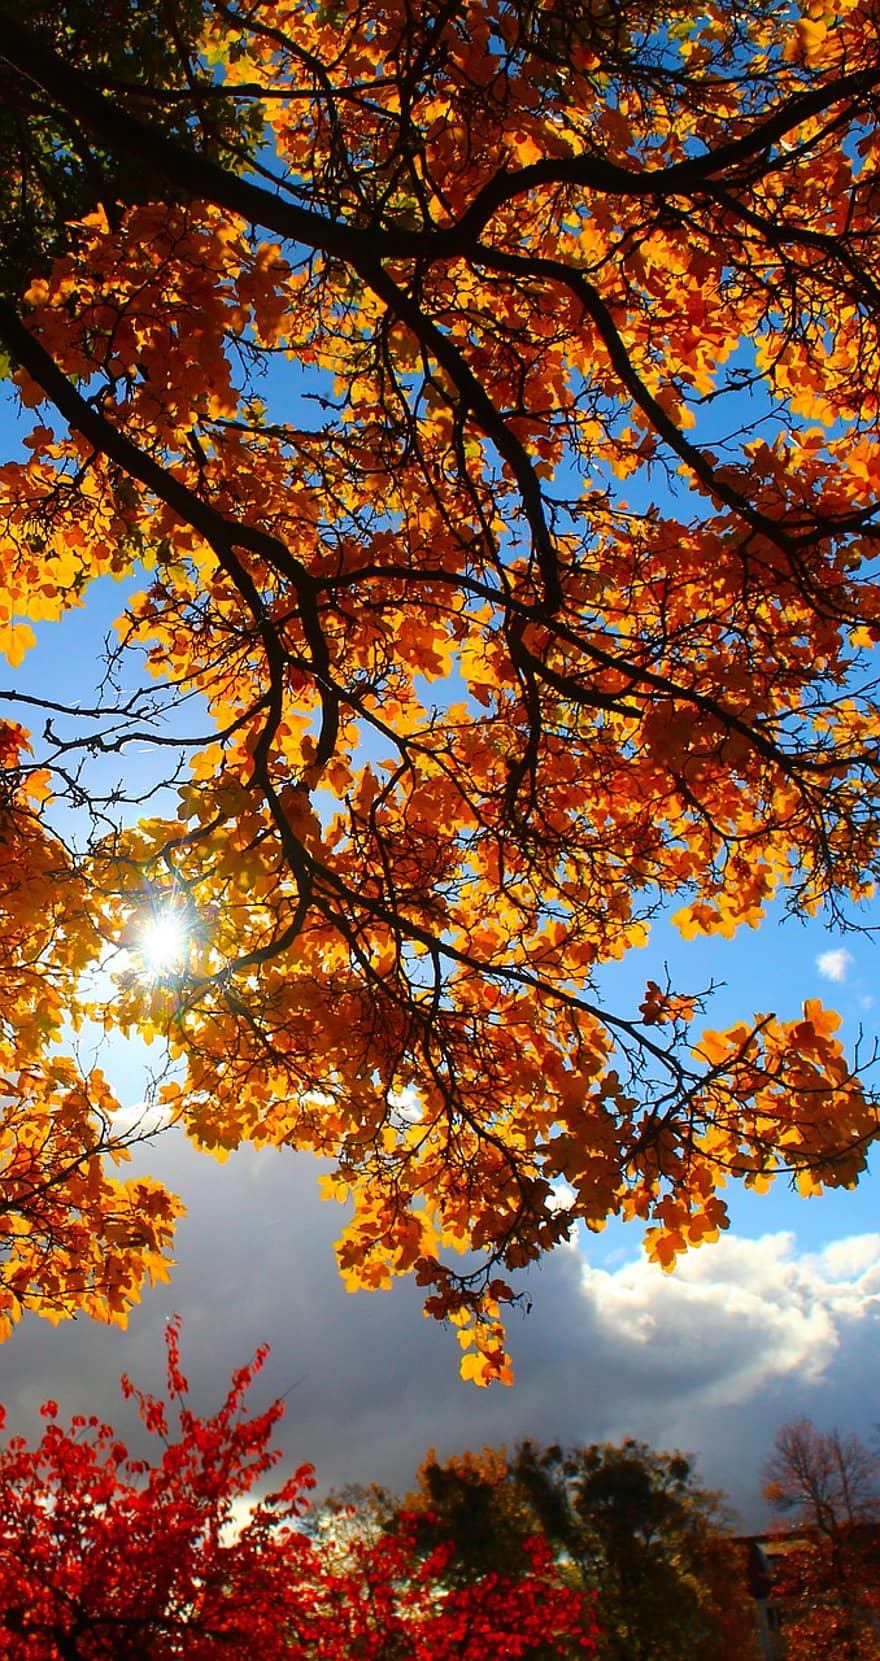 Autumn, Branches, Tree, Leaves, Sunlight, Sky, Foliage, Fall, leaf, yellow, season